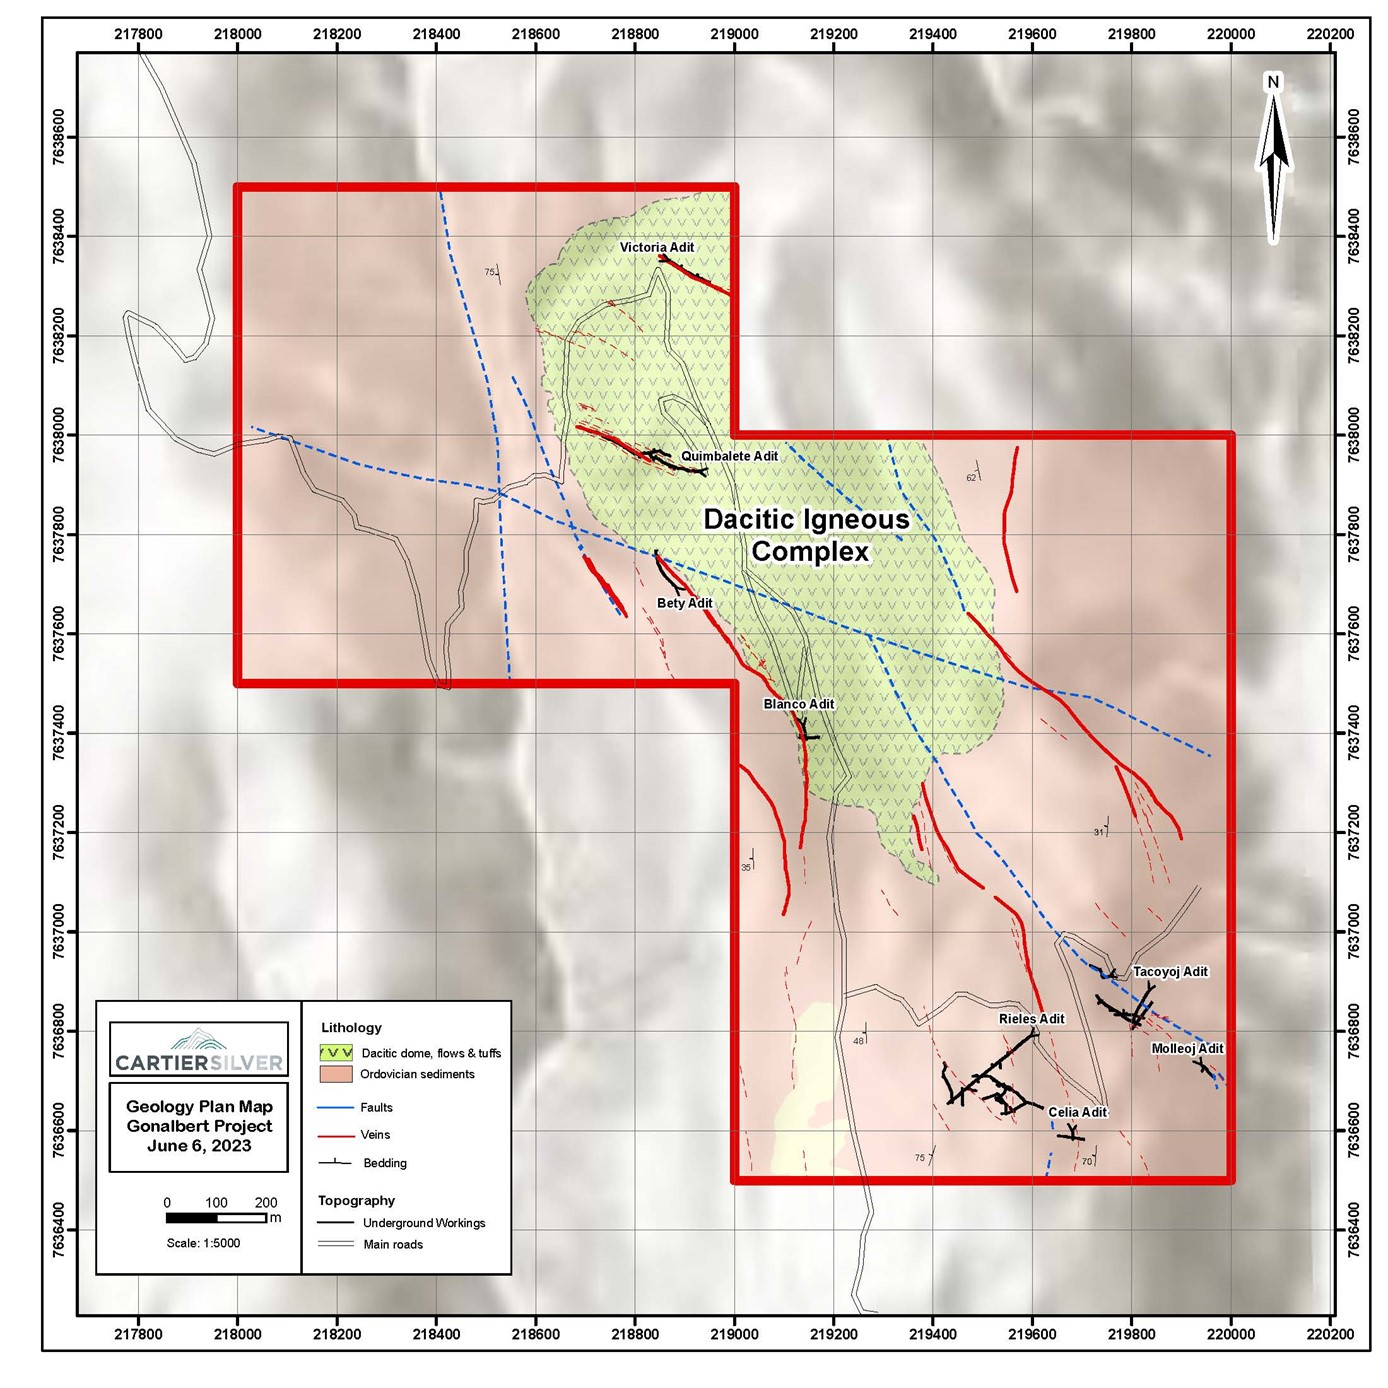 Geological Plan Map of Gonalbert Property